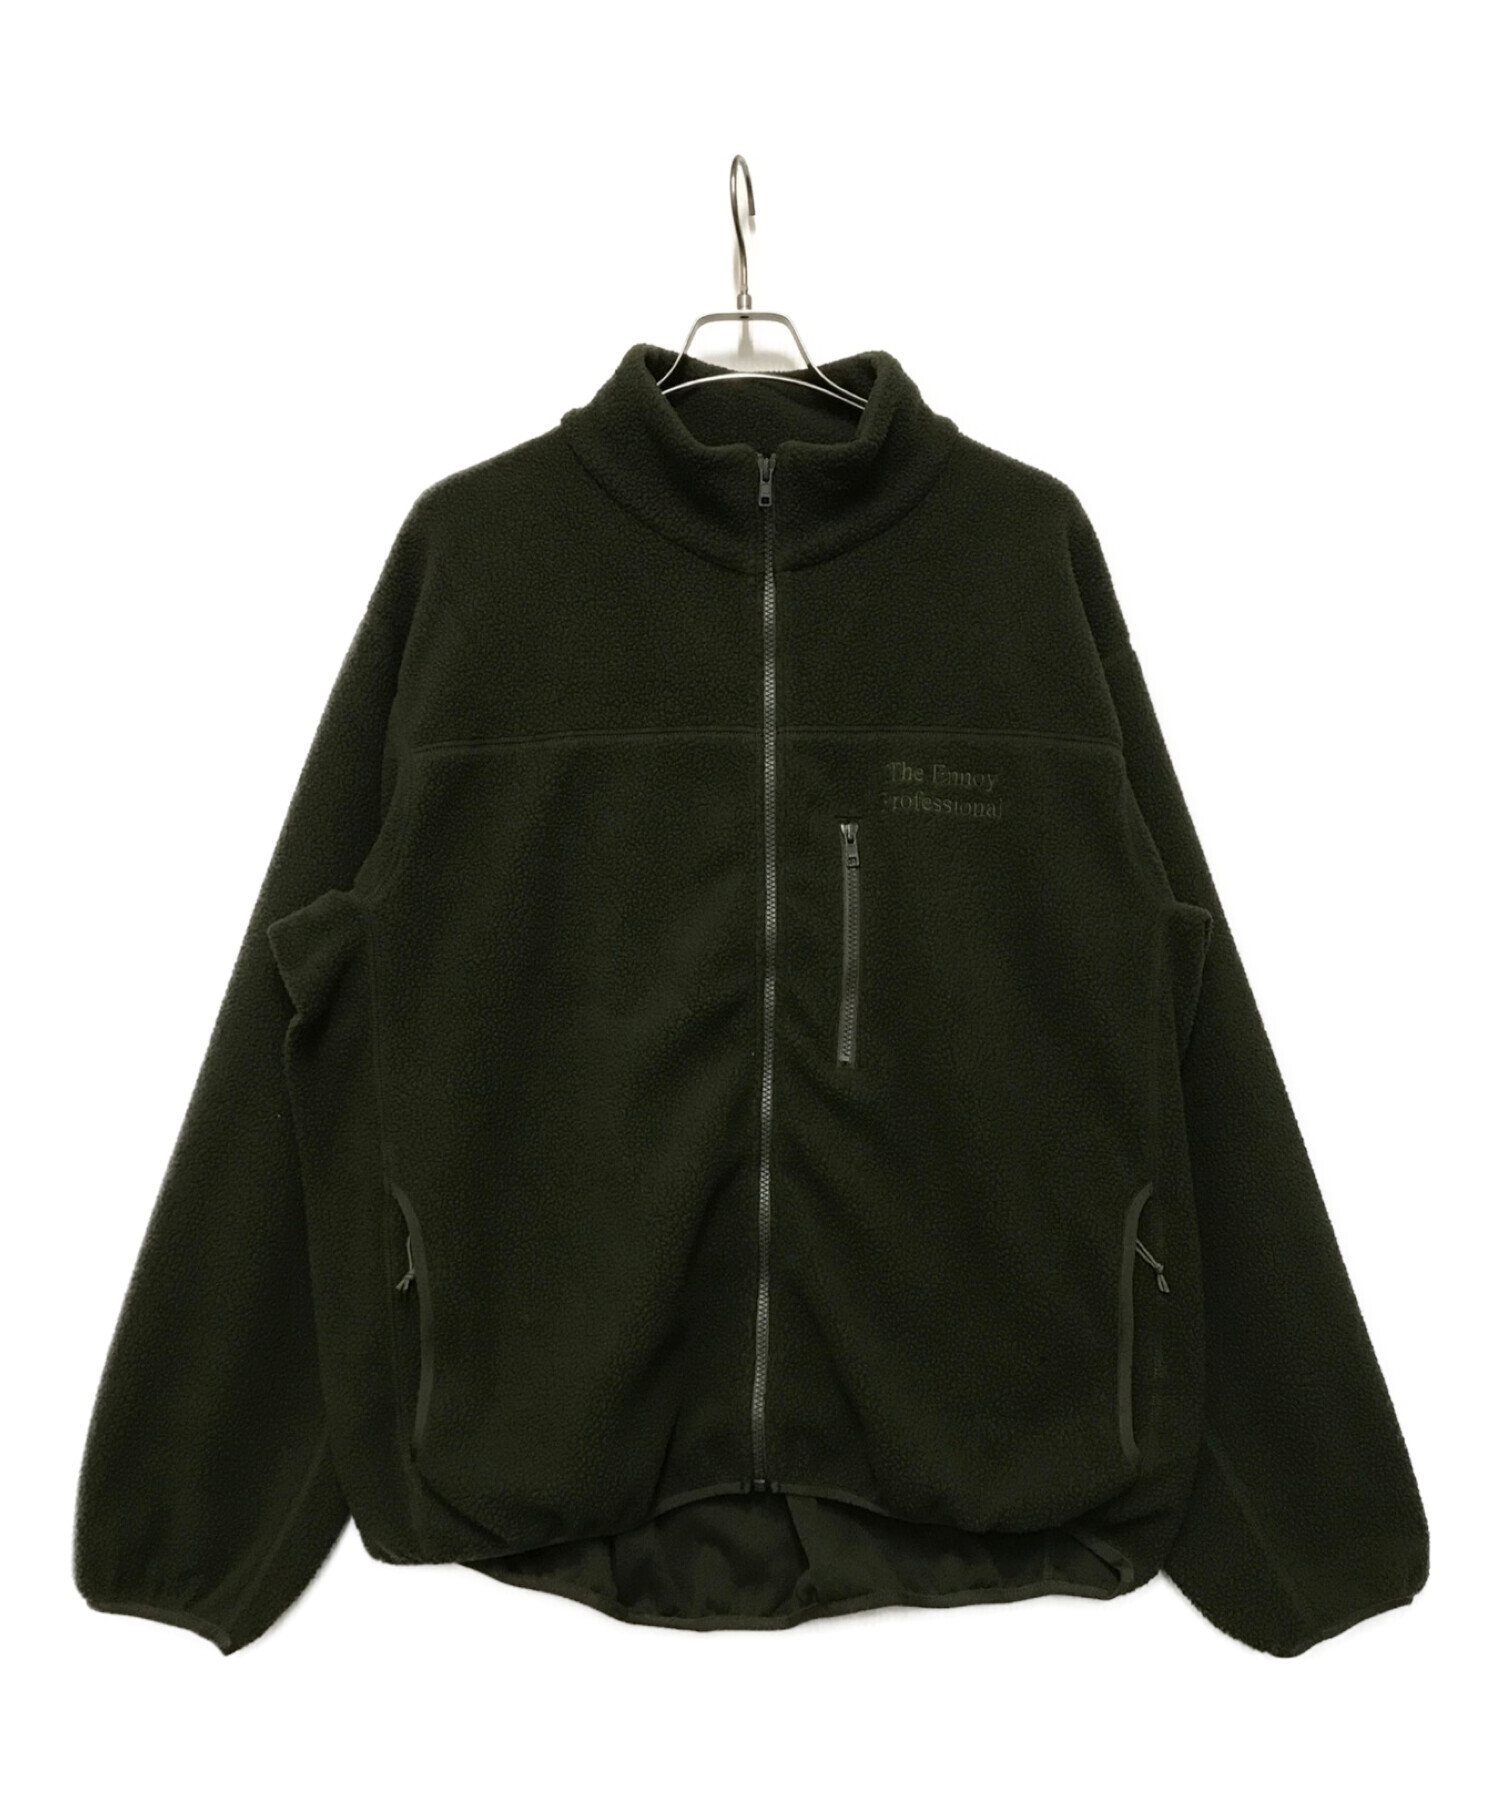 ENNOY (エンノイ) Polartec City Fleece Jacket オリーブ サイズ:XL